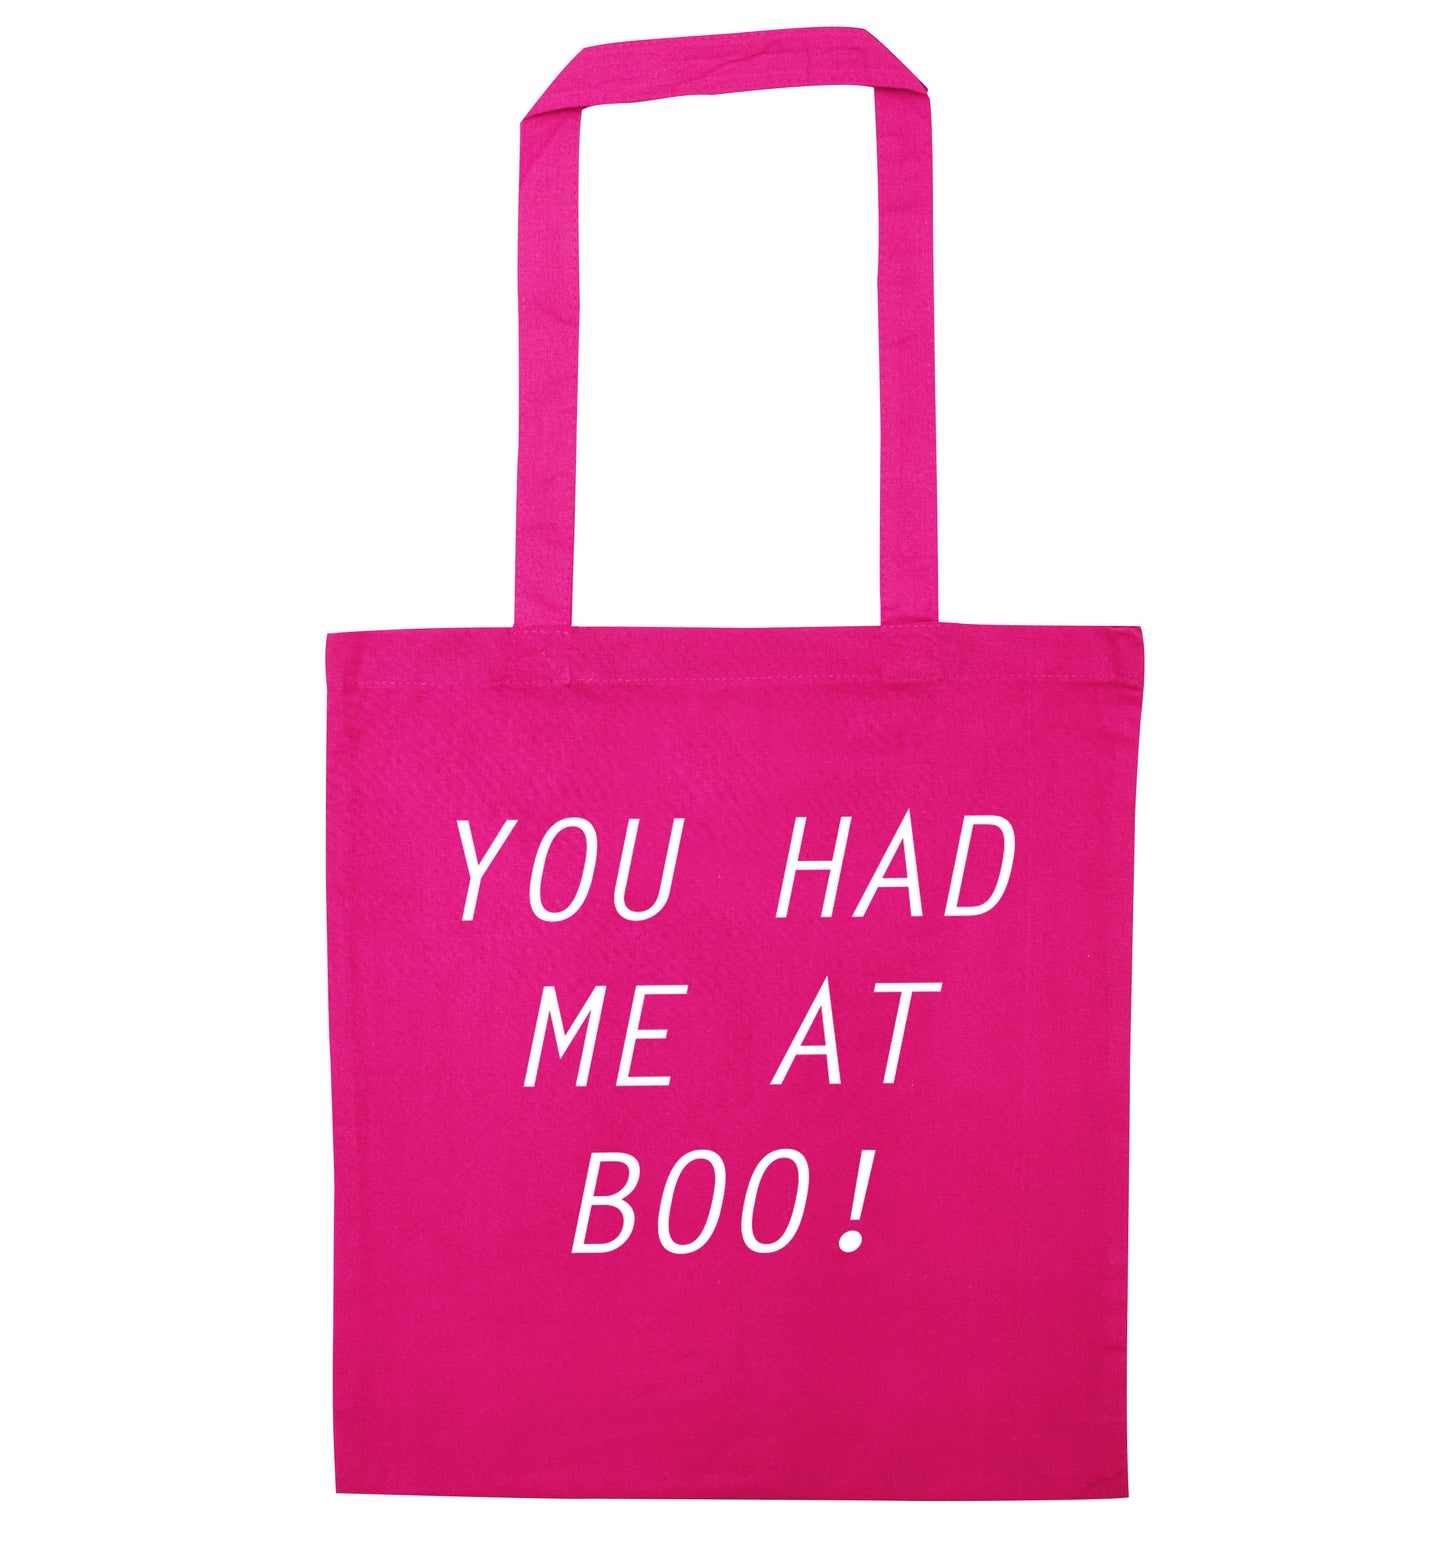 You had me at boo! pink tote bag